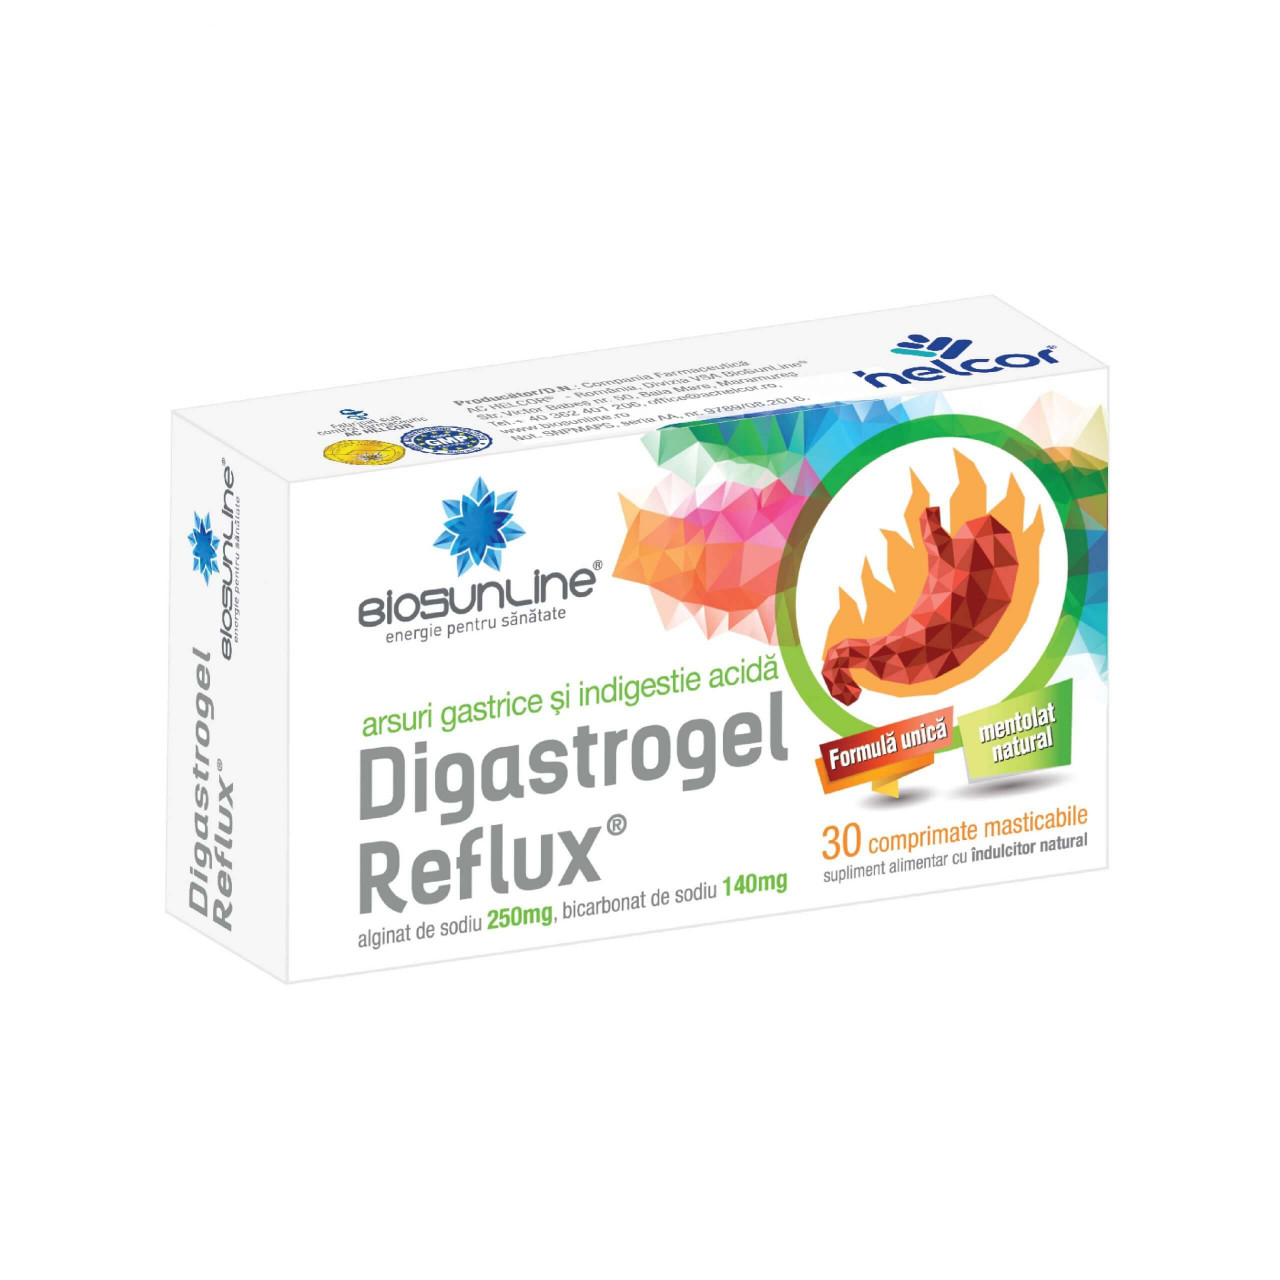 Digastrogel Reflux - 30 cpr